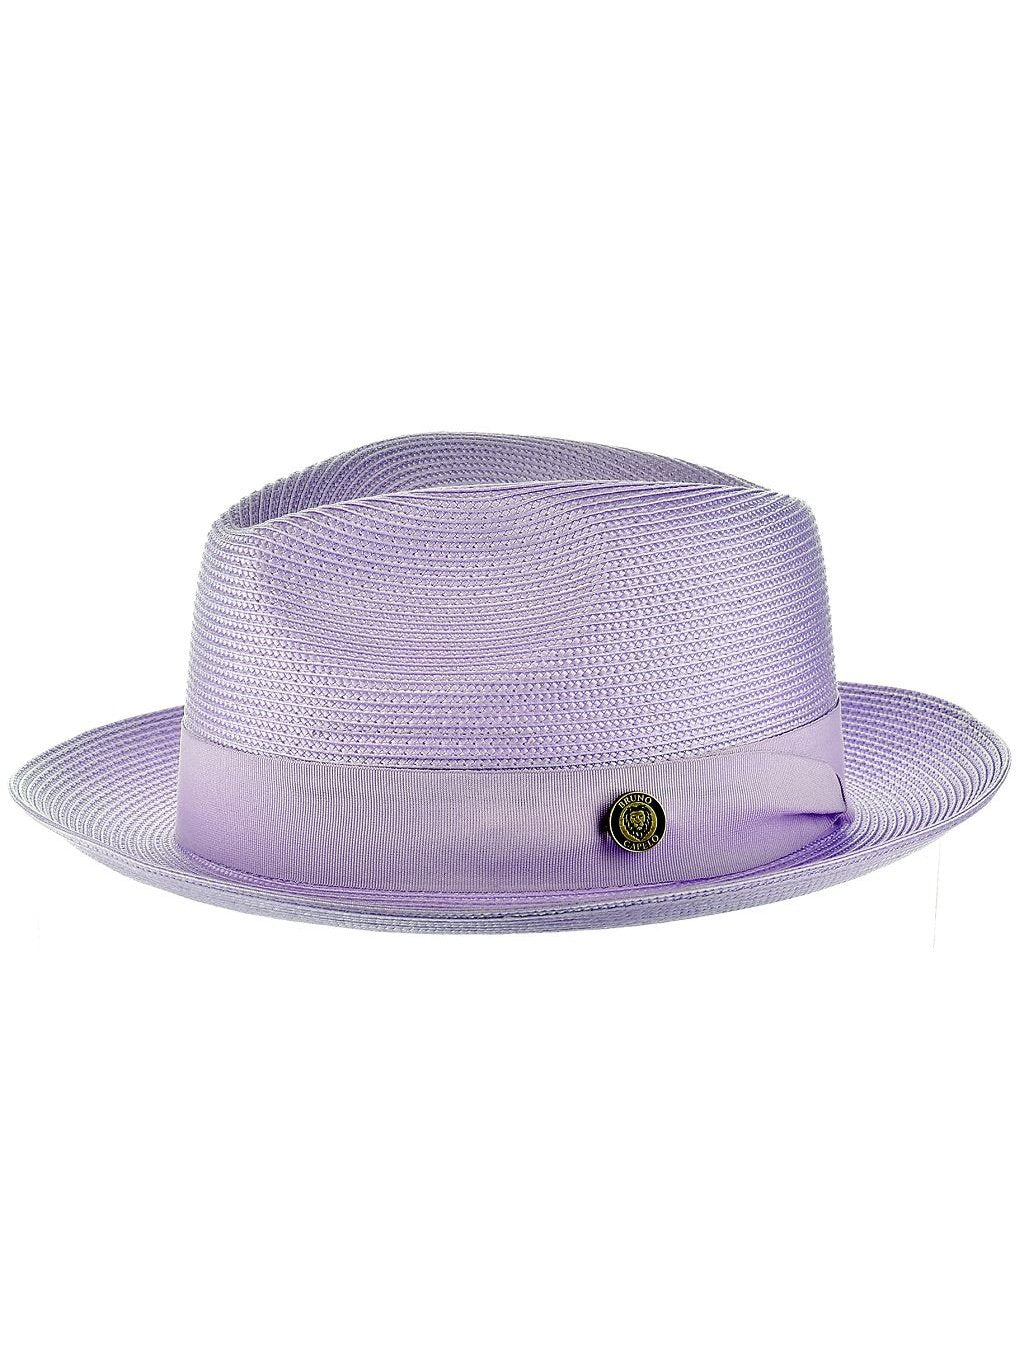 Mens The Francesco Lavender Straw Hat